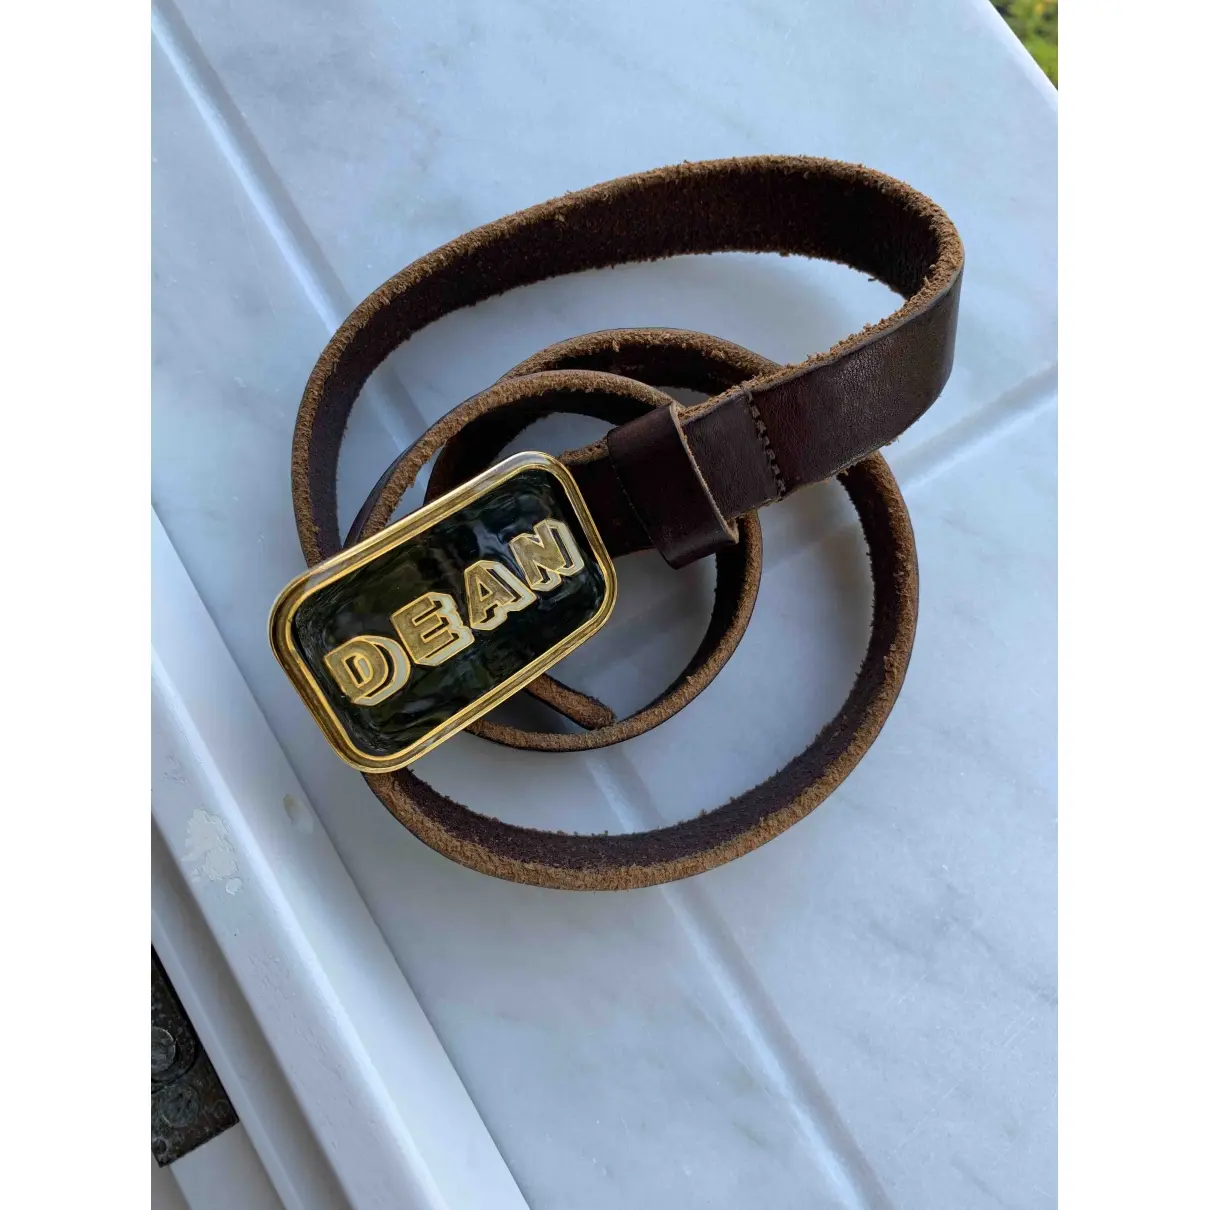 Buy Dsquared2 Leather belt online